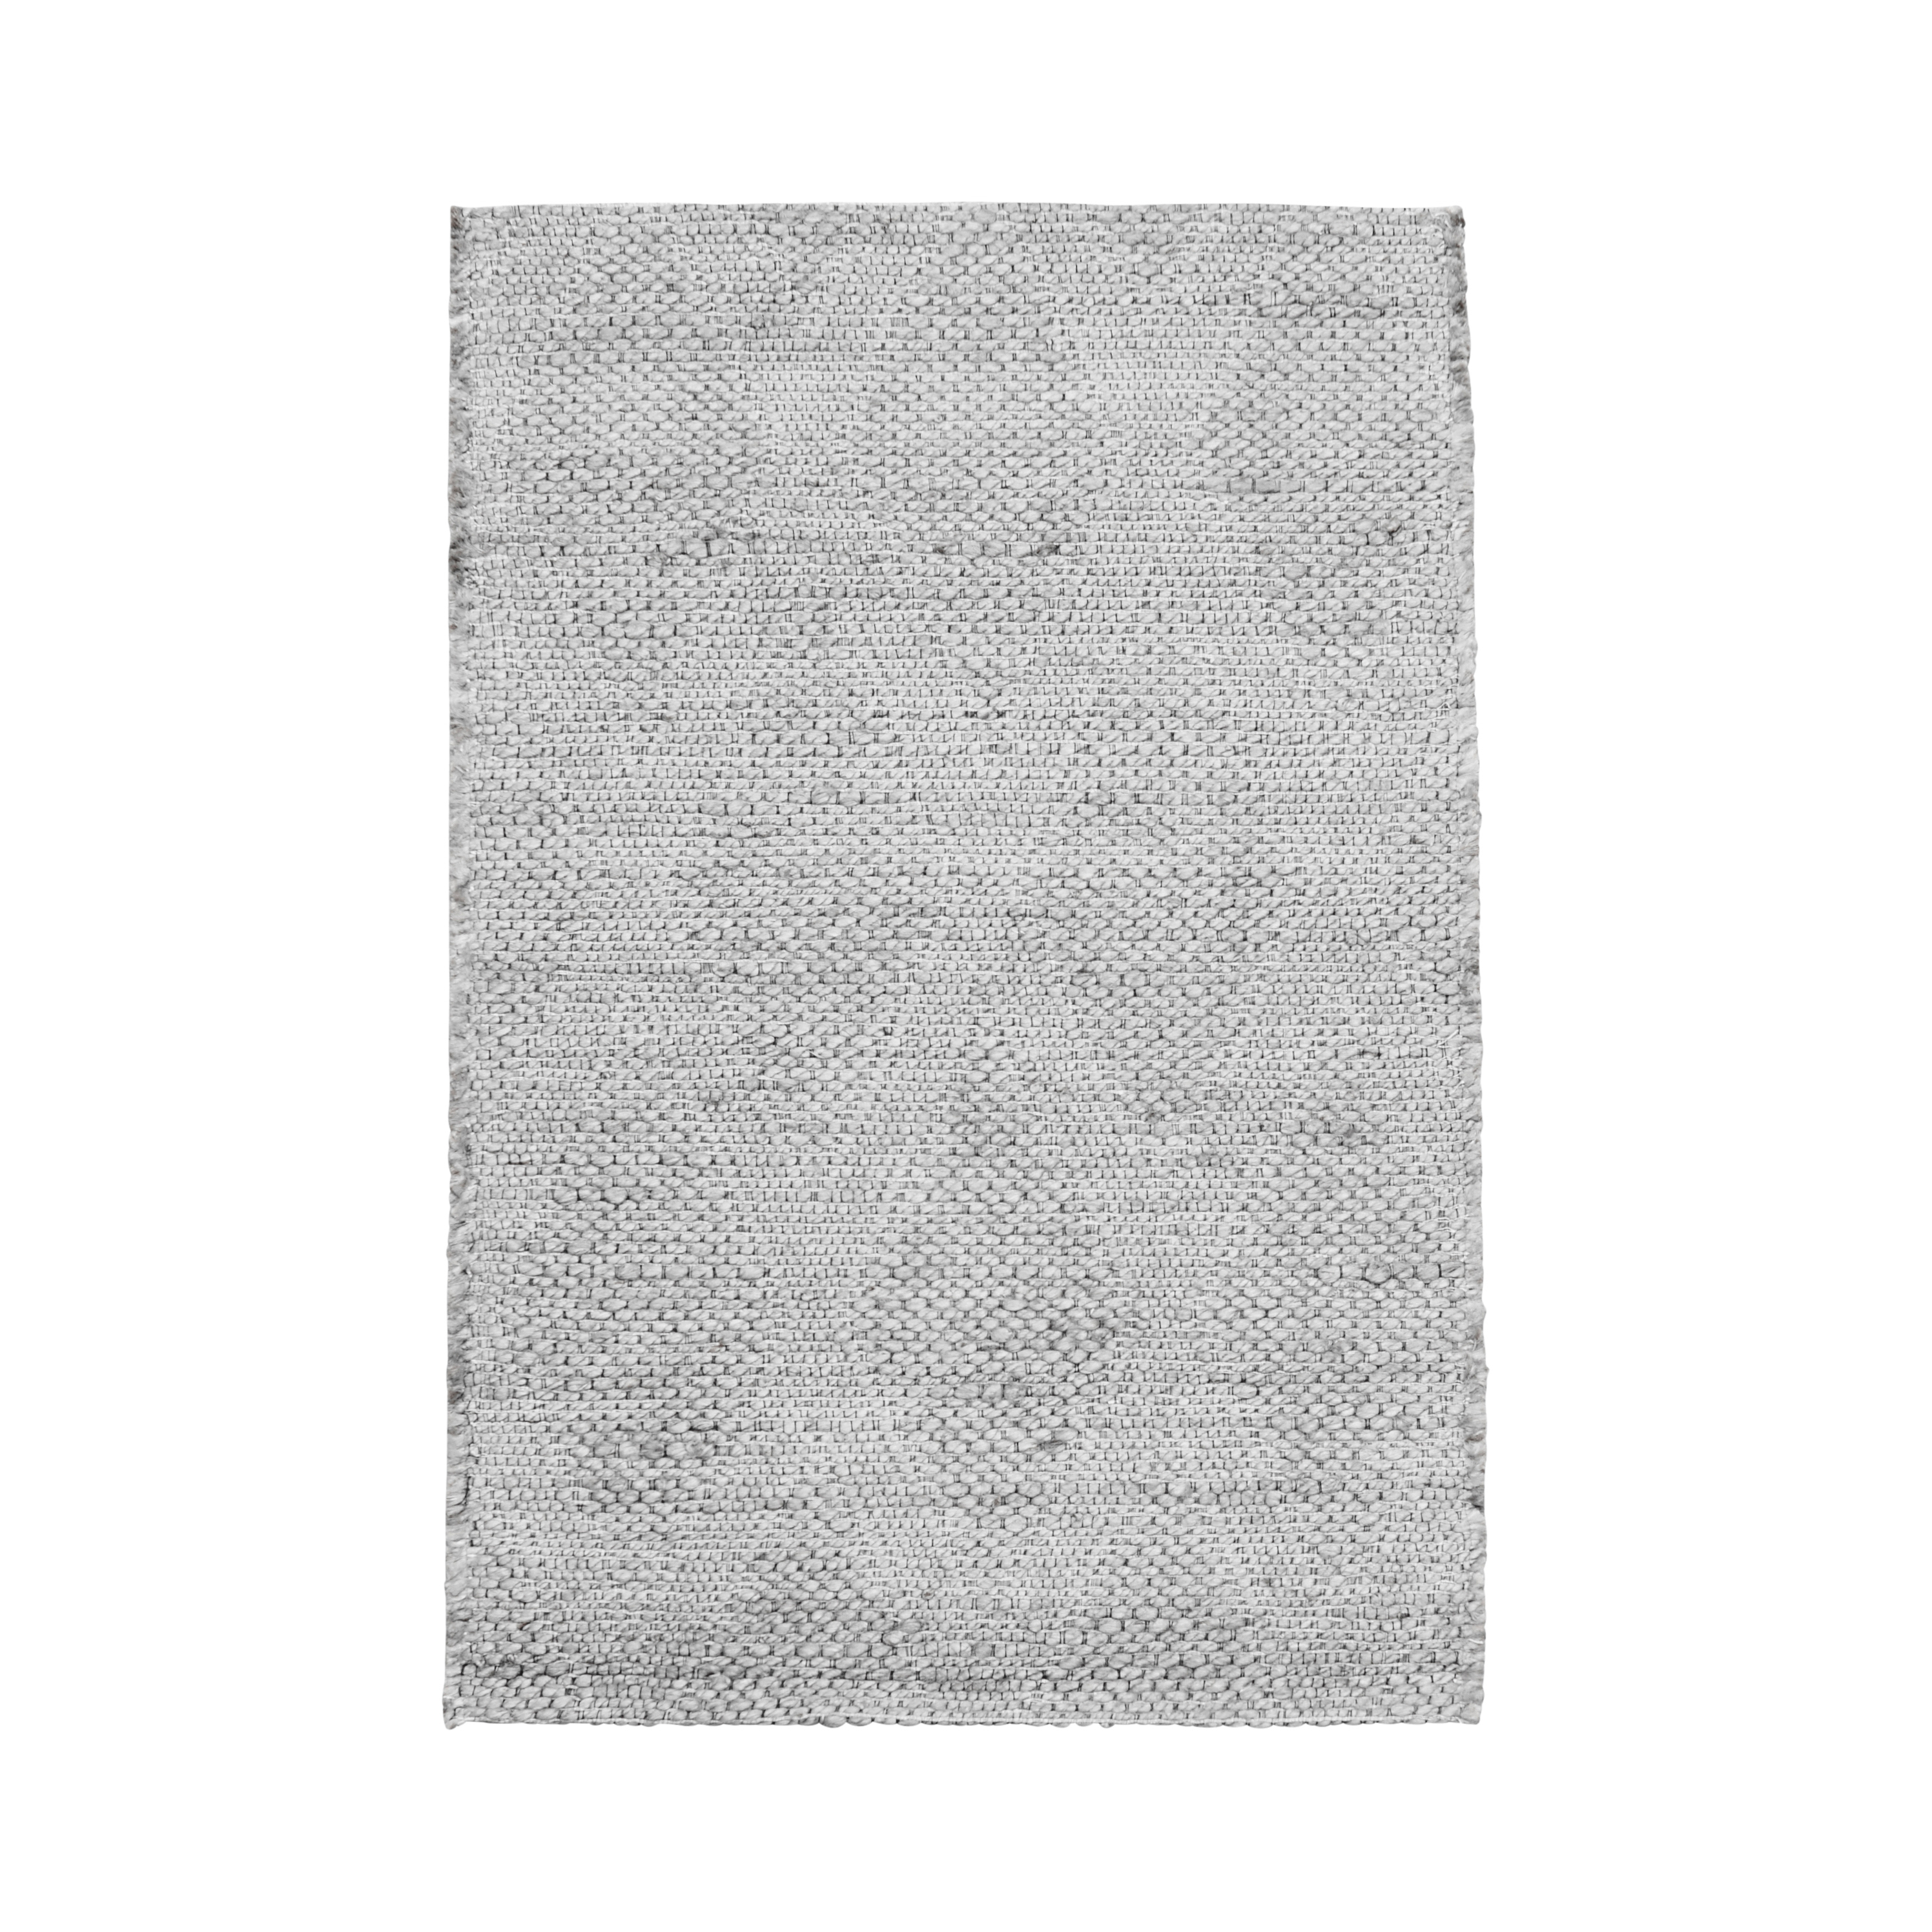 Mara rug 180x180 cm Grey from House Doctor - NordicNest.com